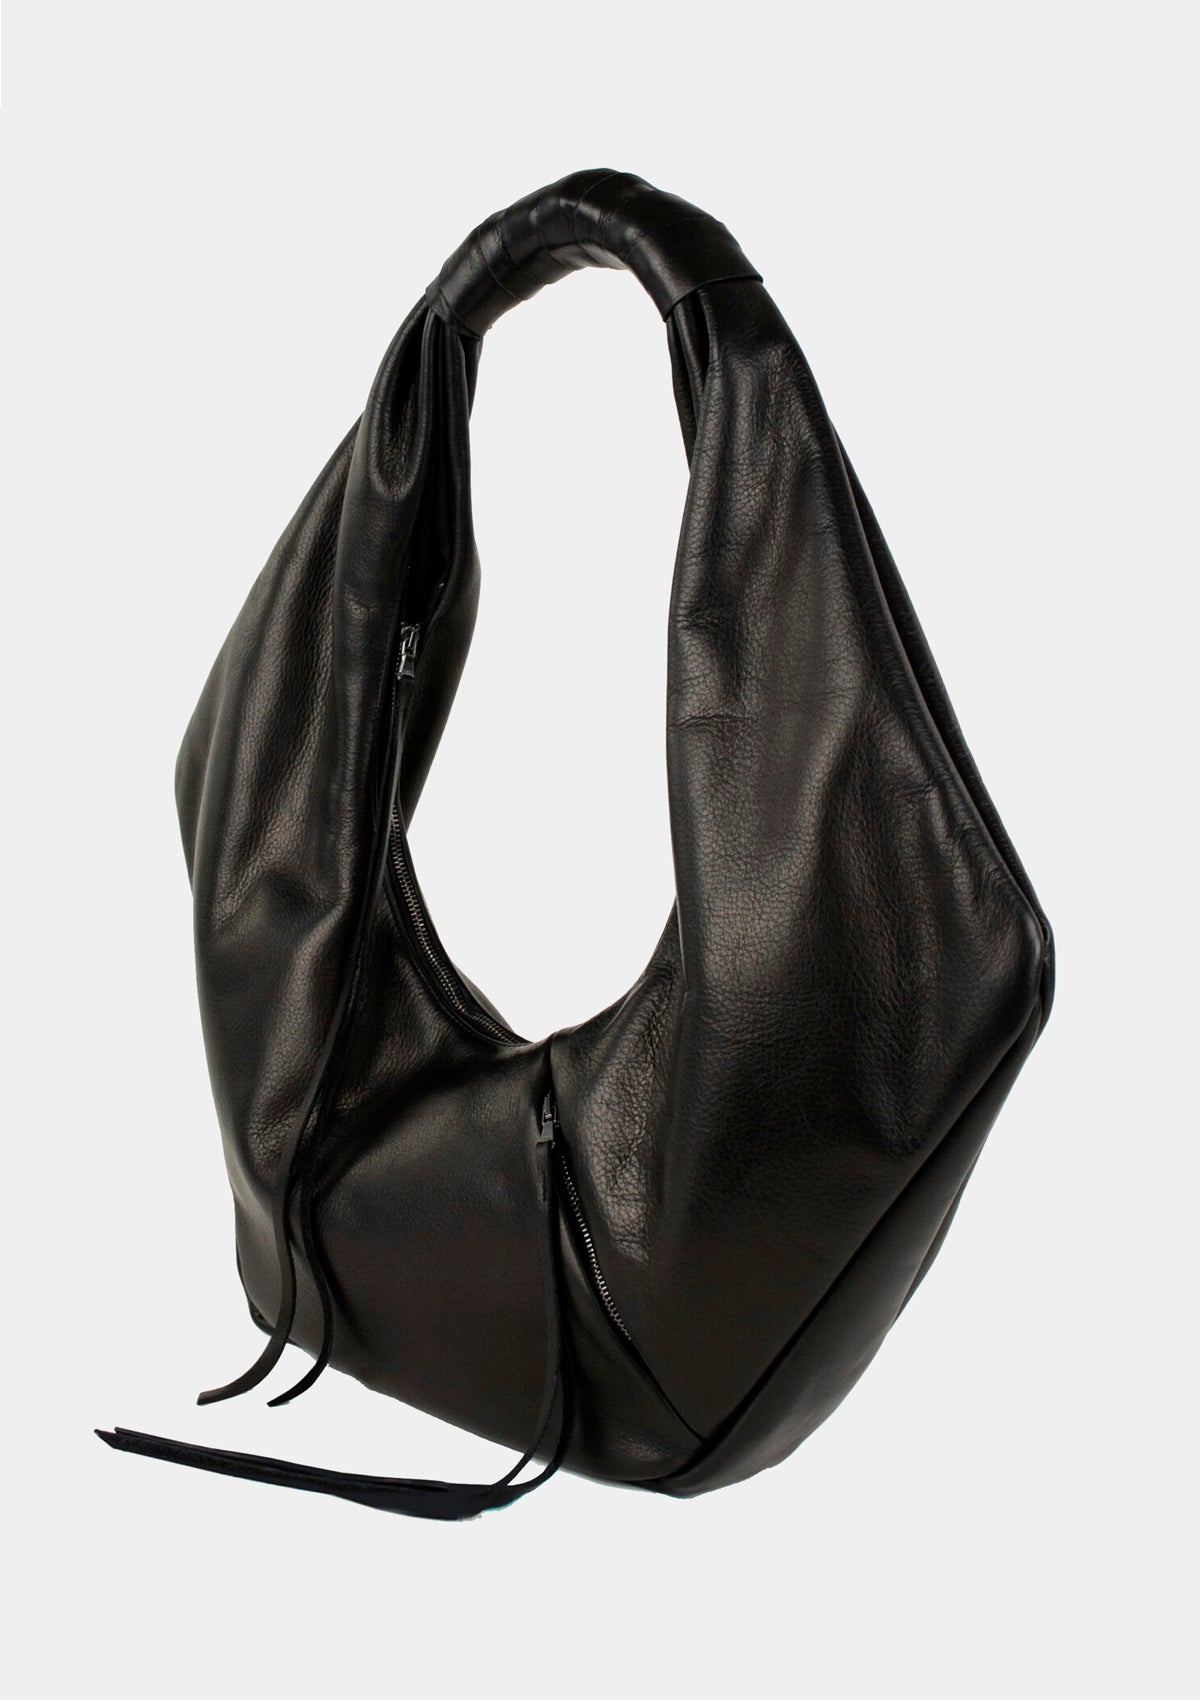 Sullivan Black Leather Tote Soho Bag women fashion accessories